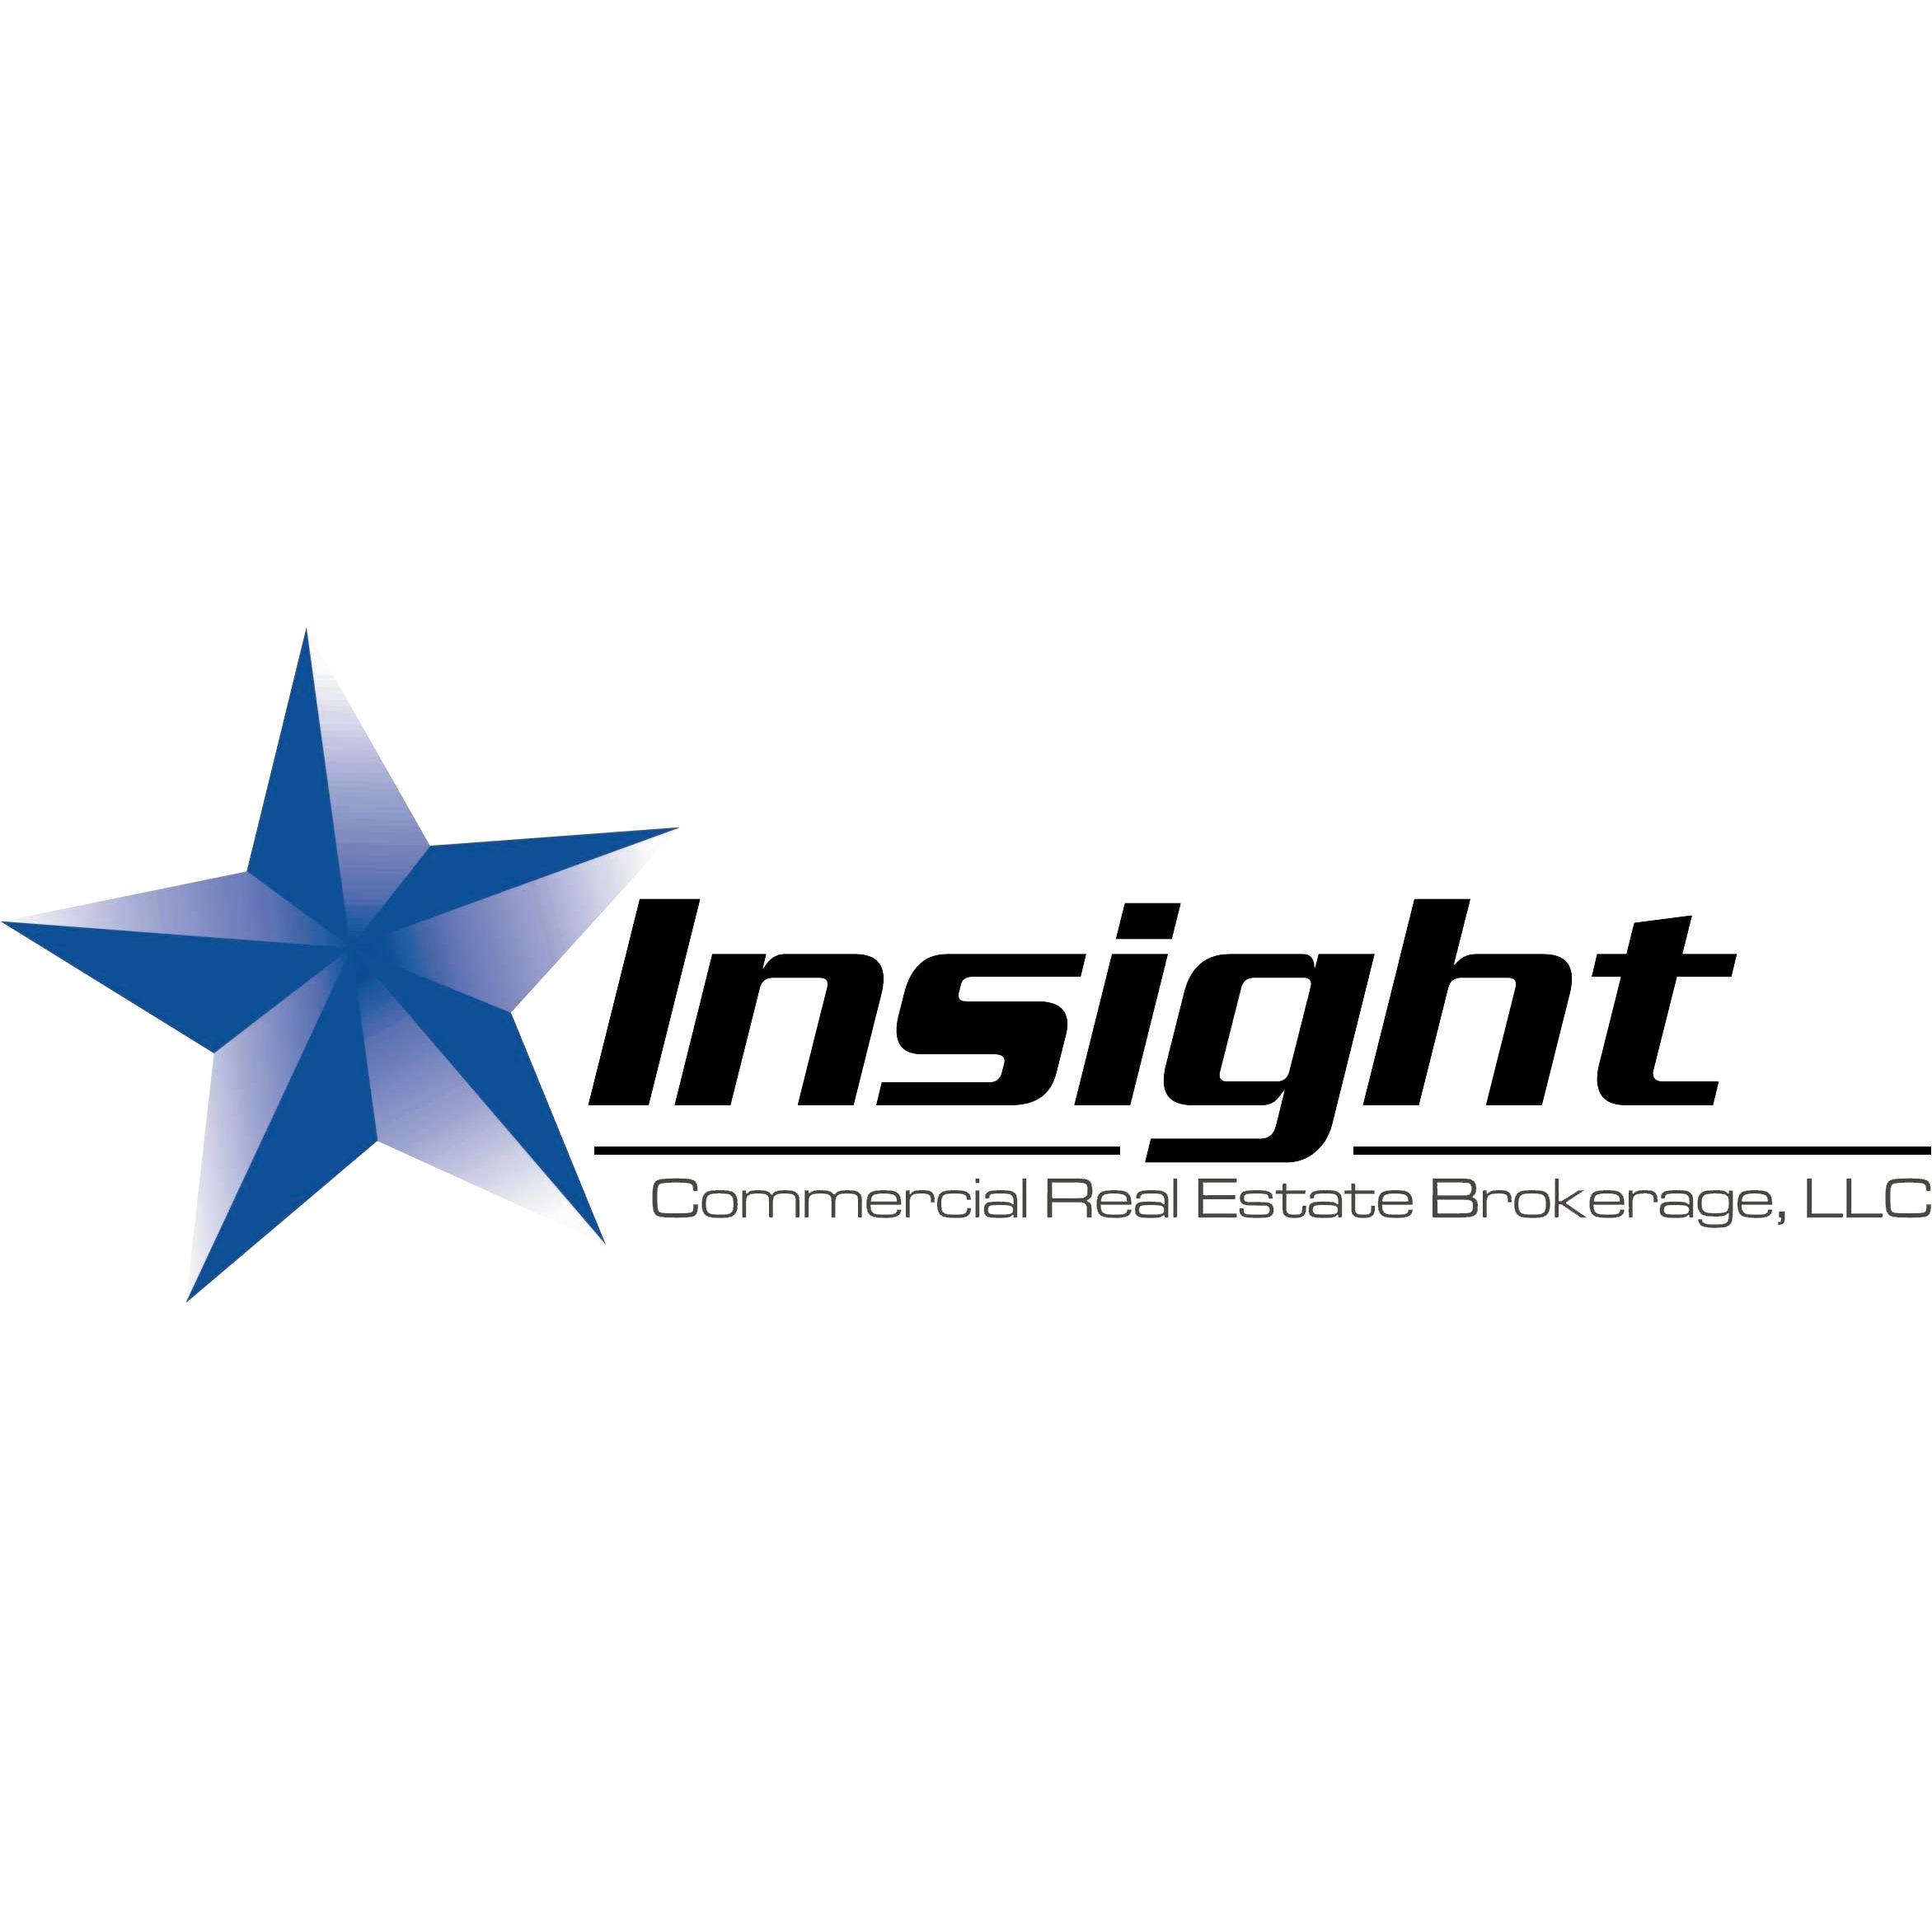 Insight Commercial Real Estate Brokerage, LLC Logo